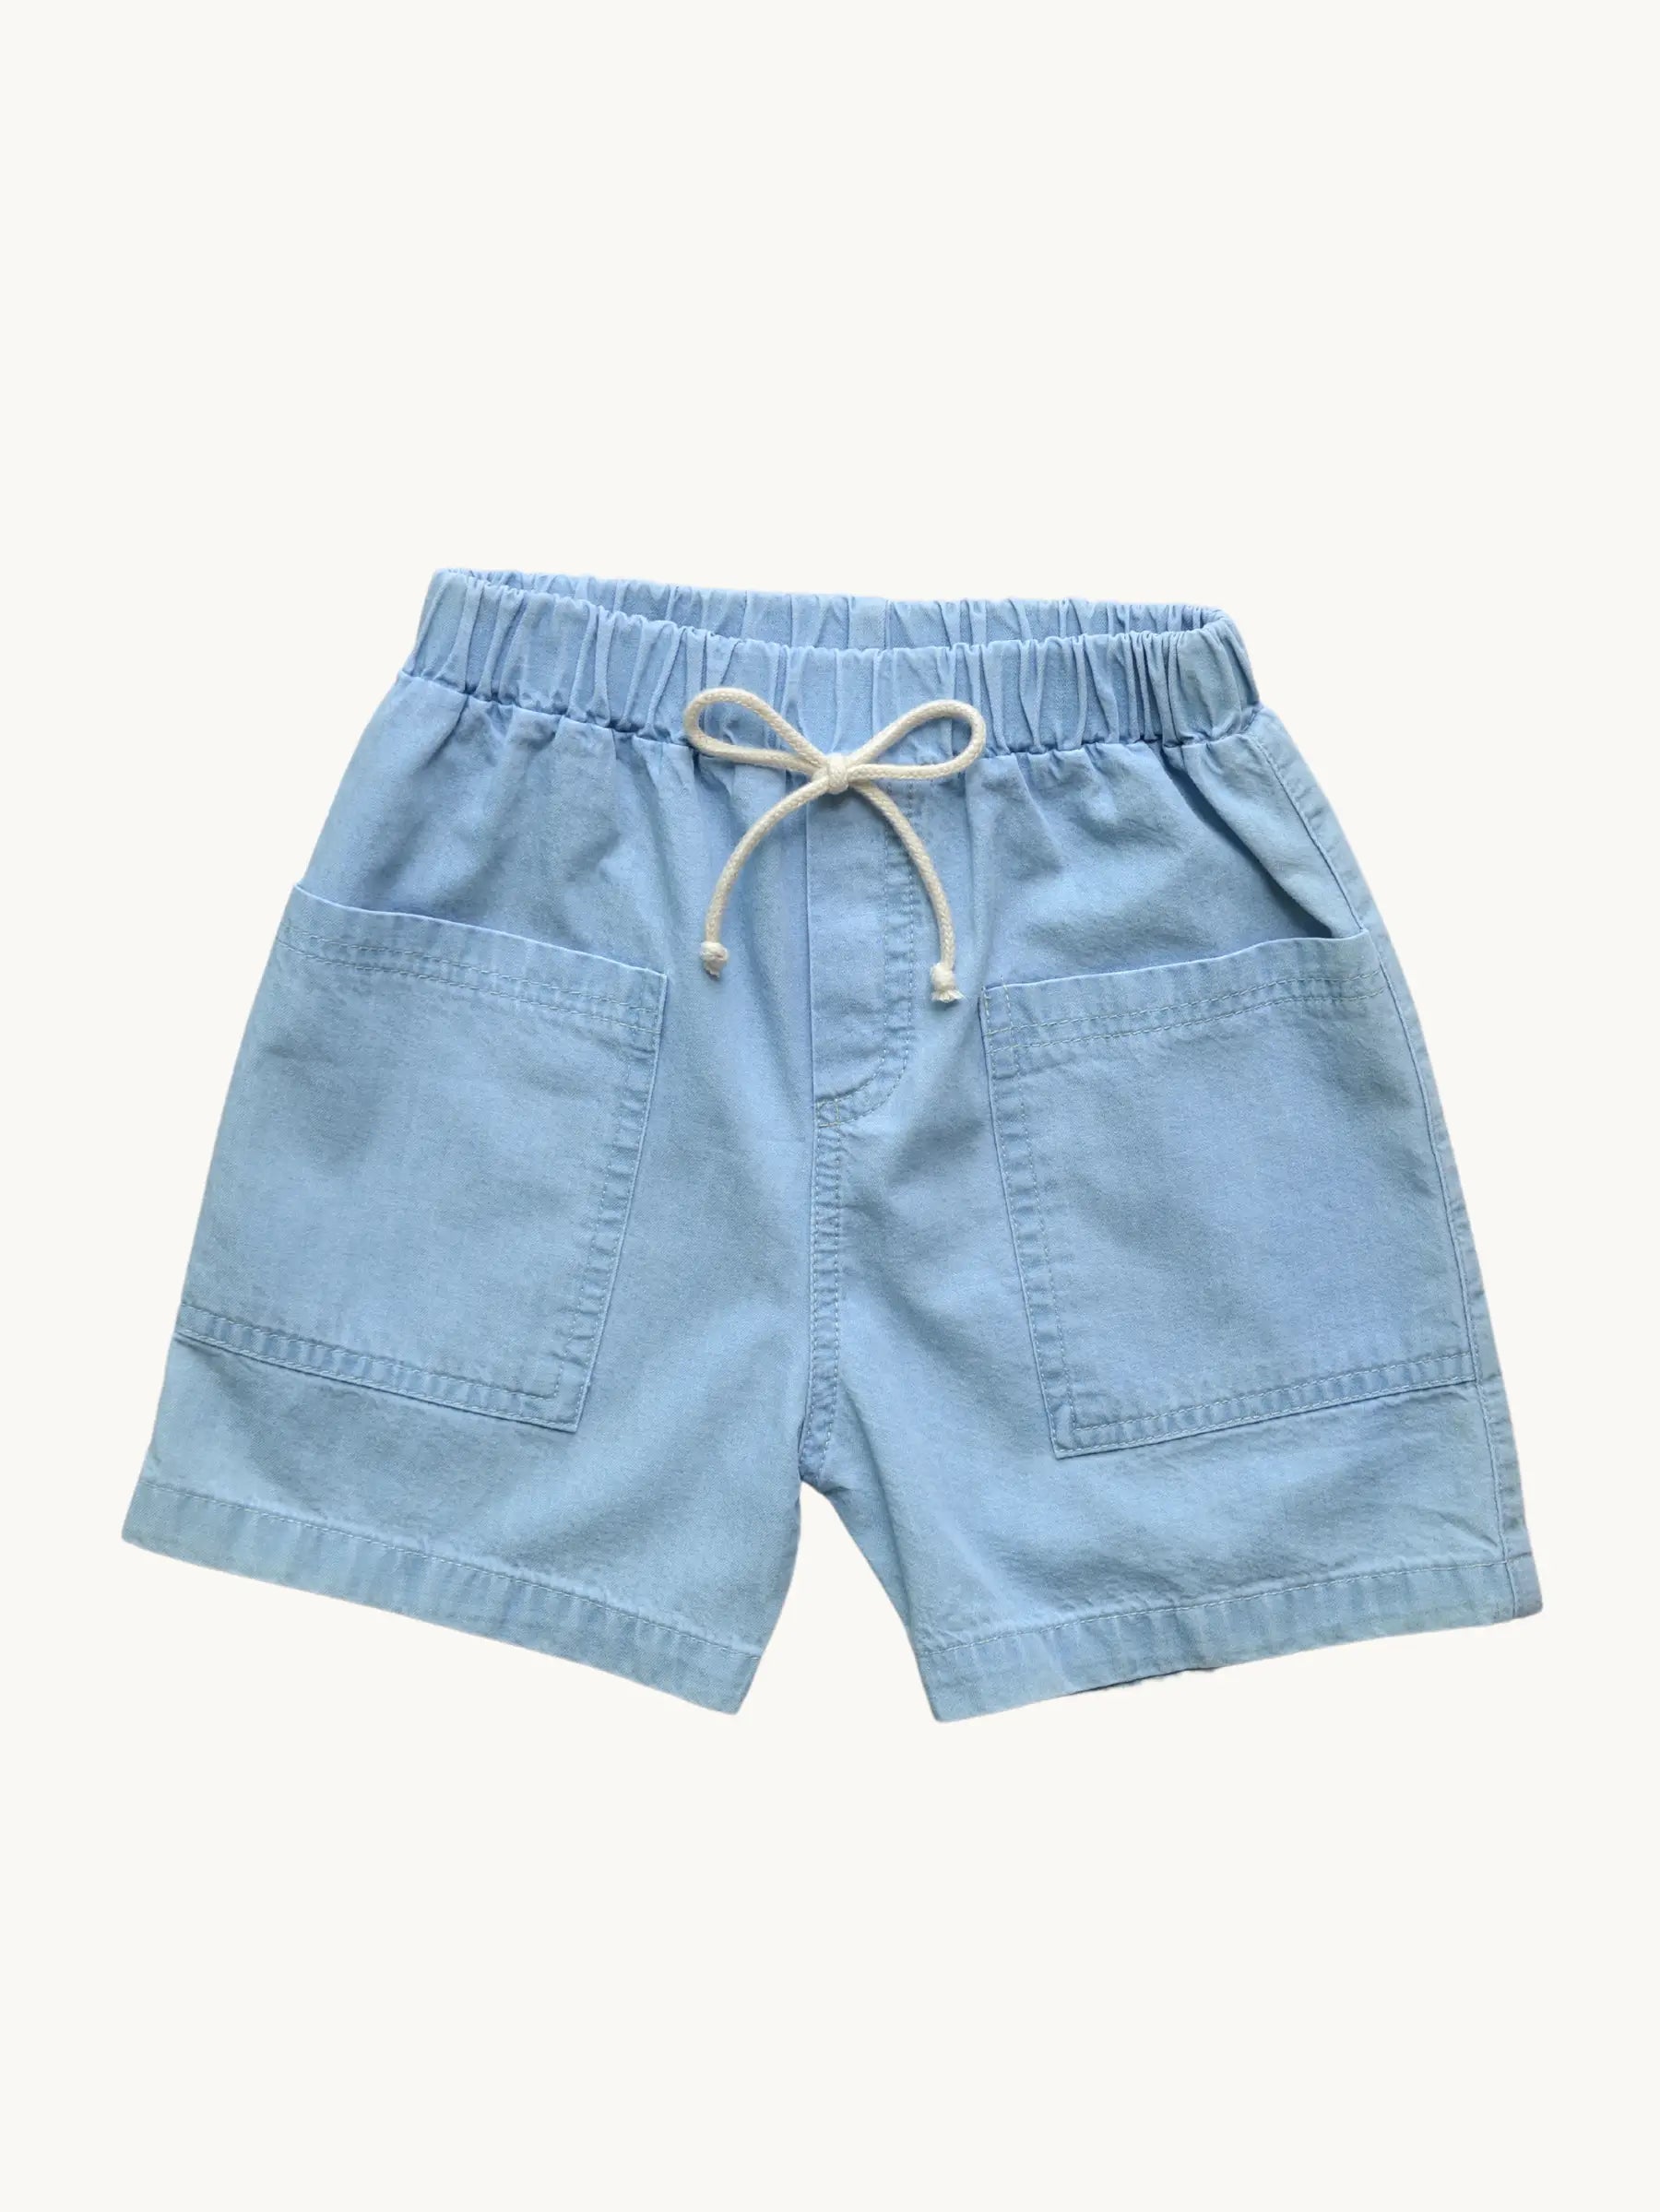 Eli & Nev Mae Baby/Kid's Shorts (100% Cotton) blue shorts